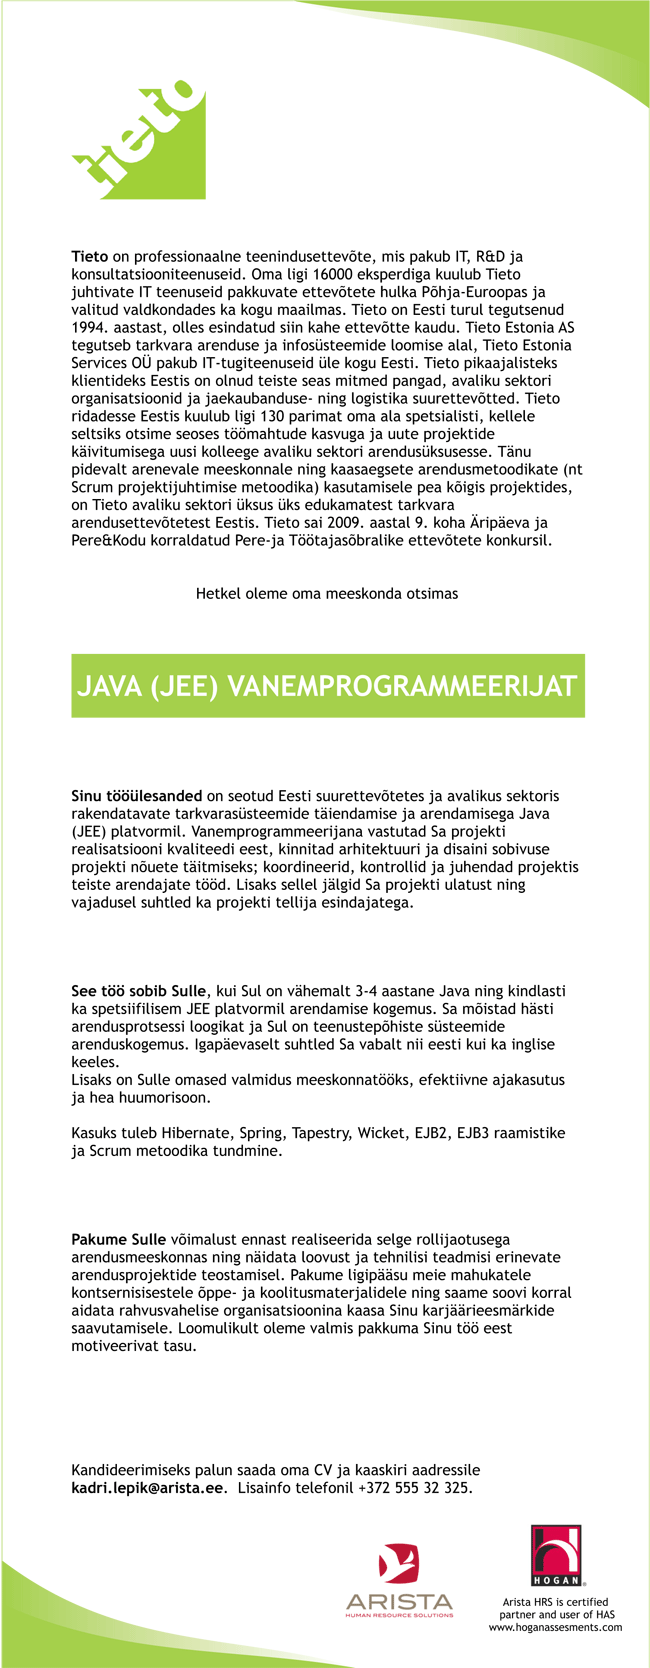 CVKeskus.ee klient Java (JEE) vanemprogrammeerija